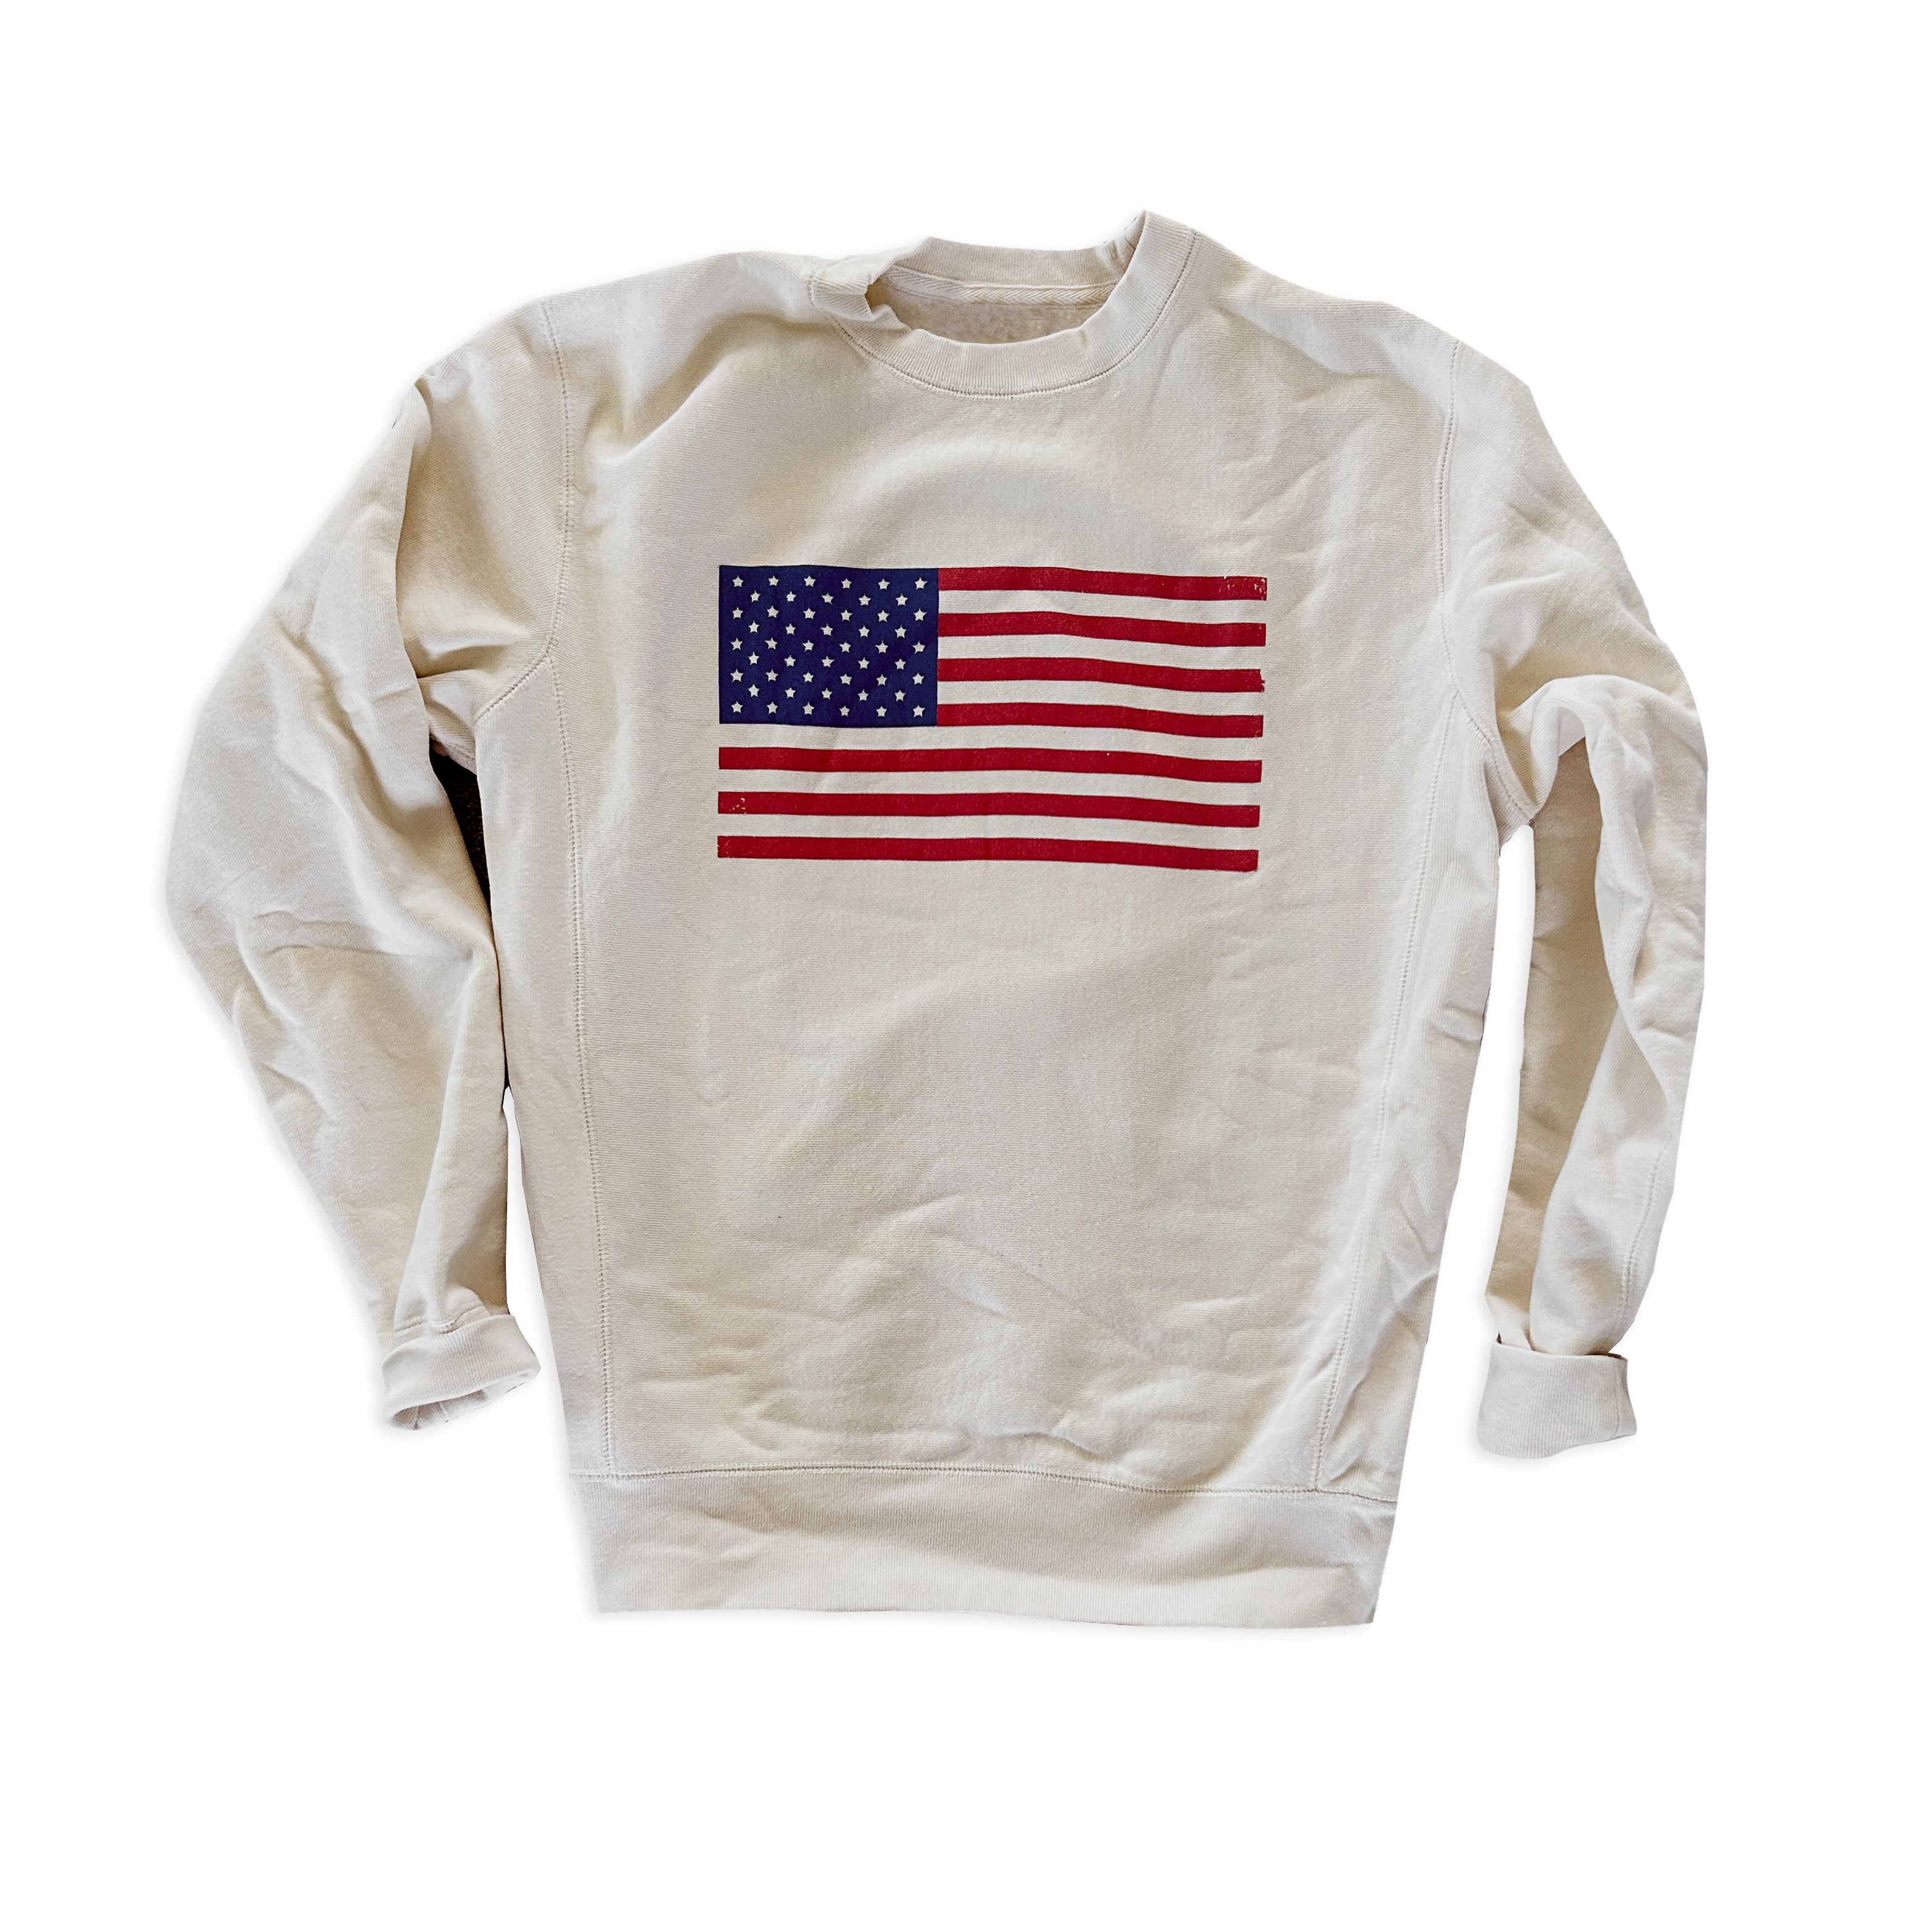 ON SALE - Flag Sweatshirt (Discount shown in cart)